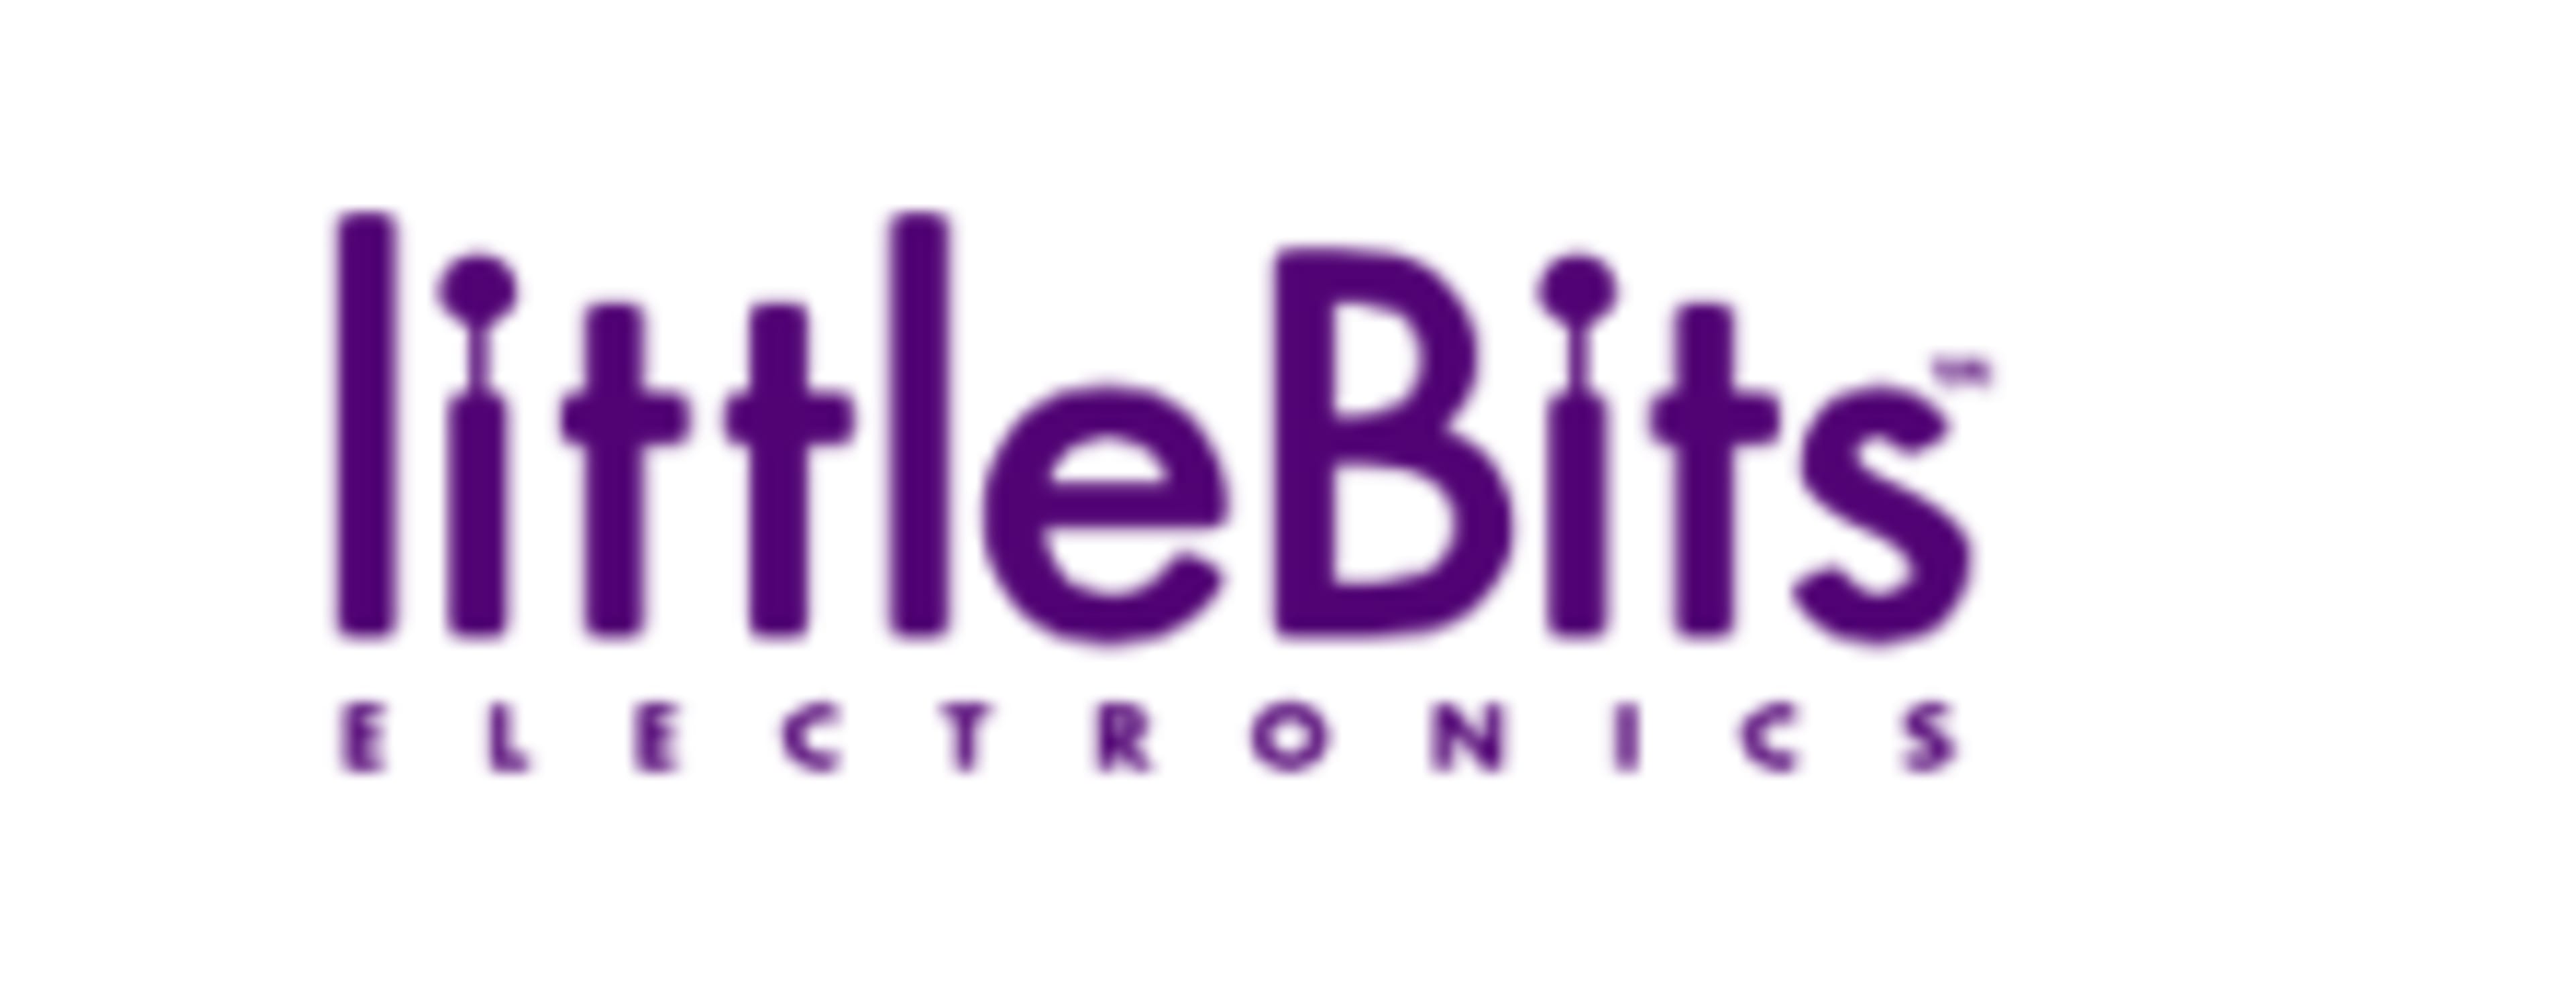 littleBitsCode